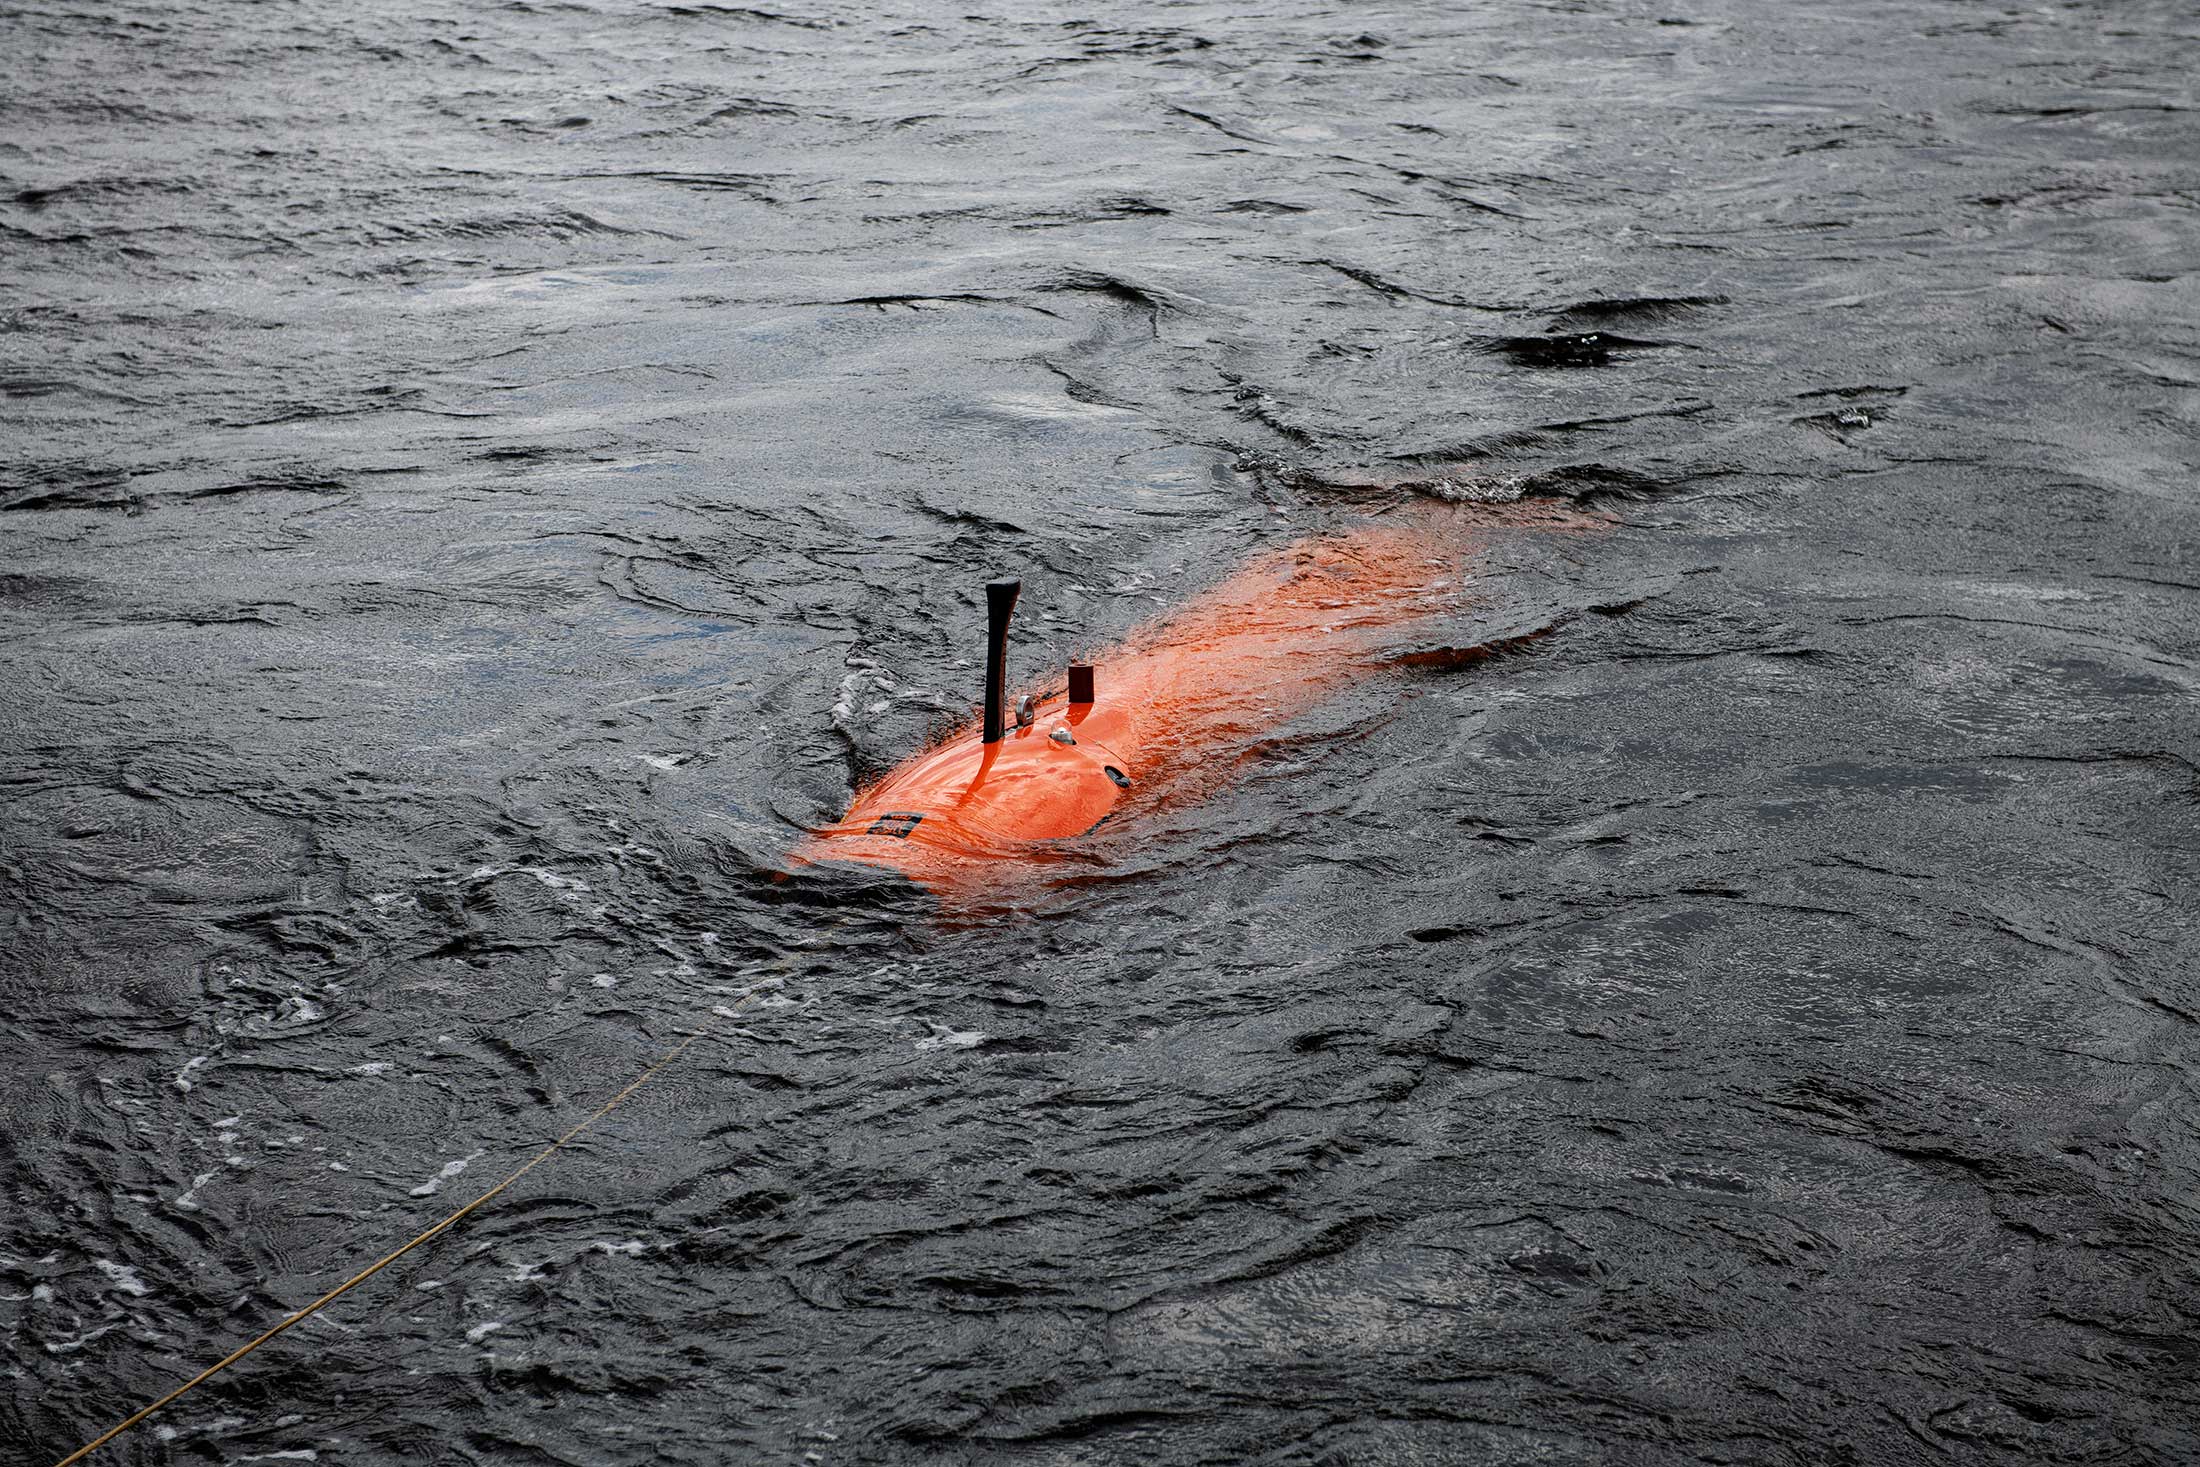 Retrieving a Hugin drone after a test run offshore.